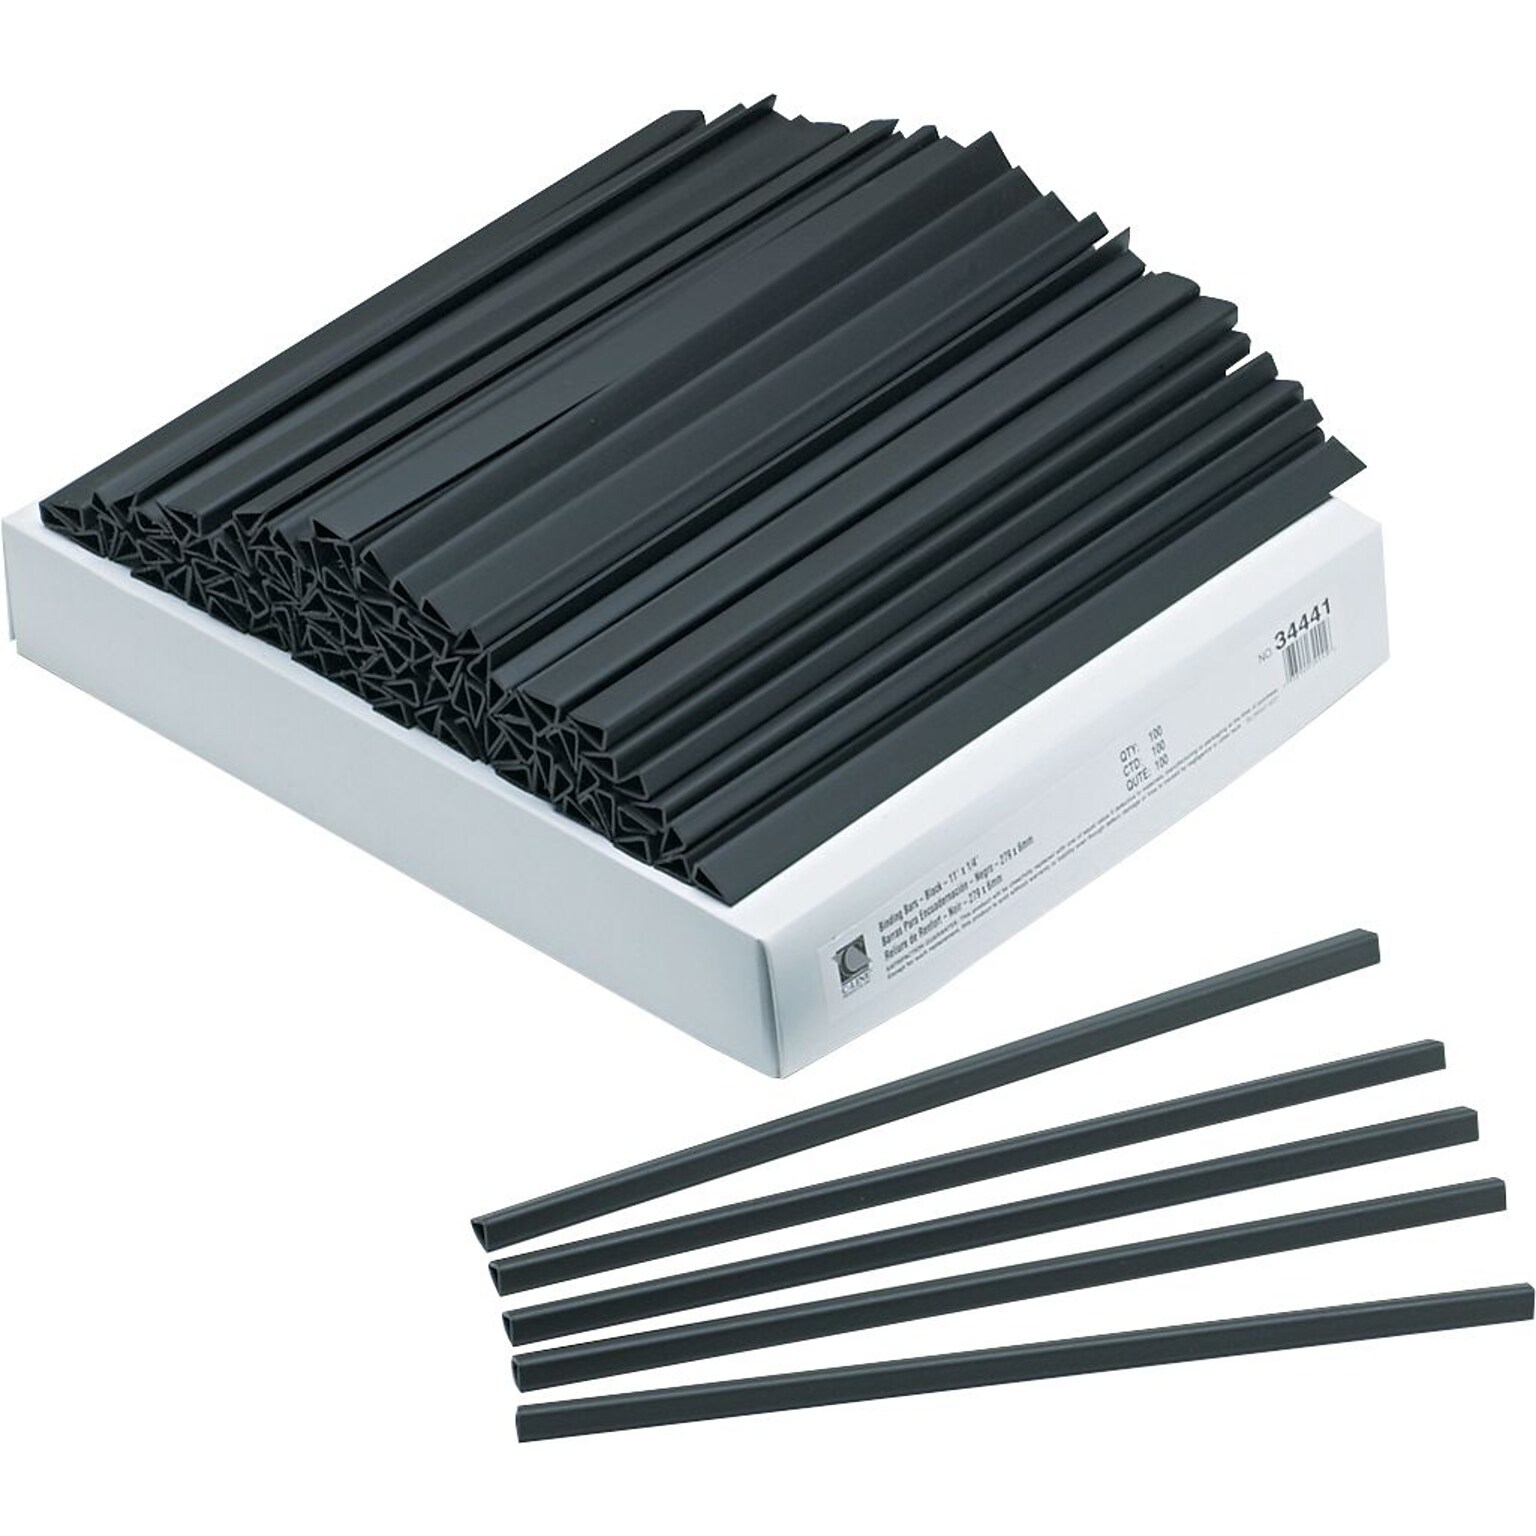 C-Line Slide N Grip Binding Bars, Black, 100/Box (34441)